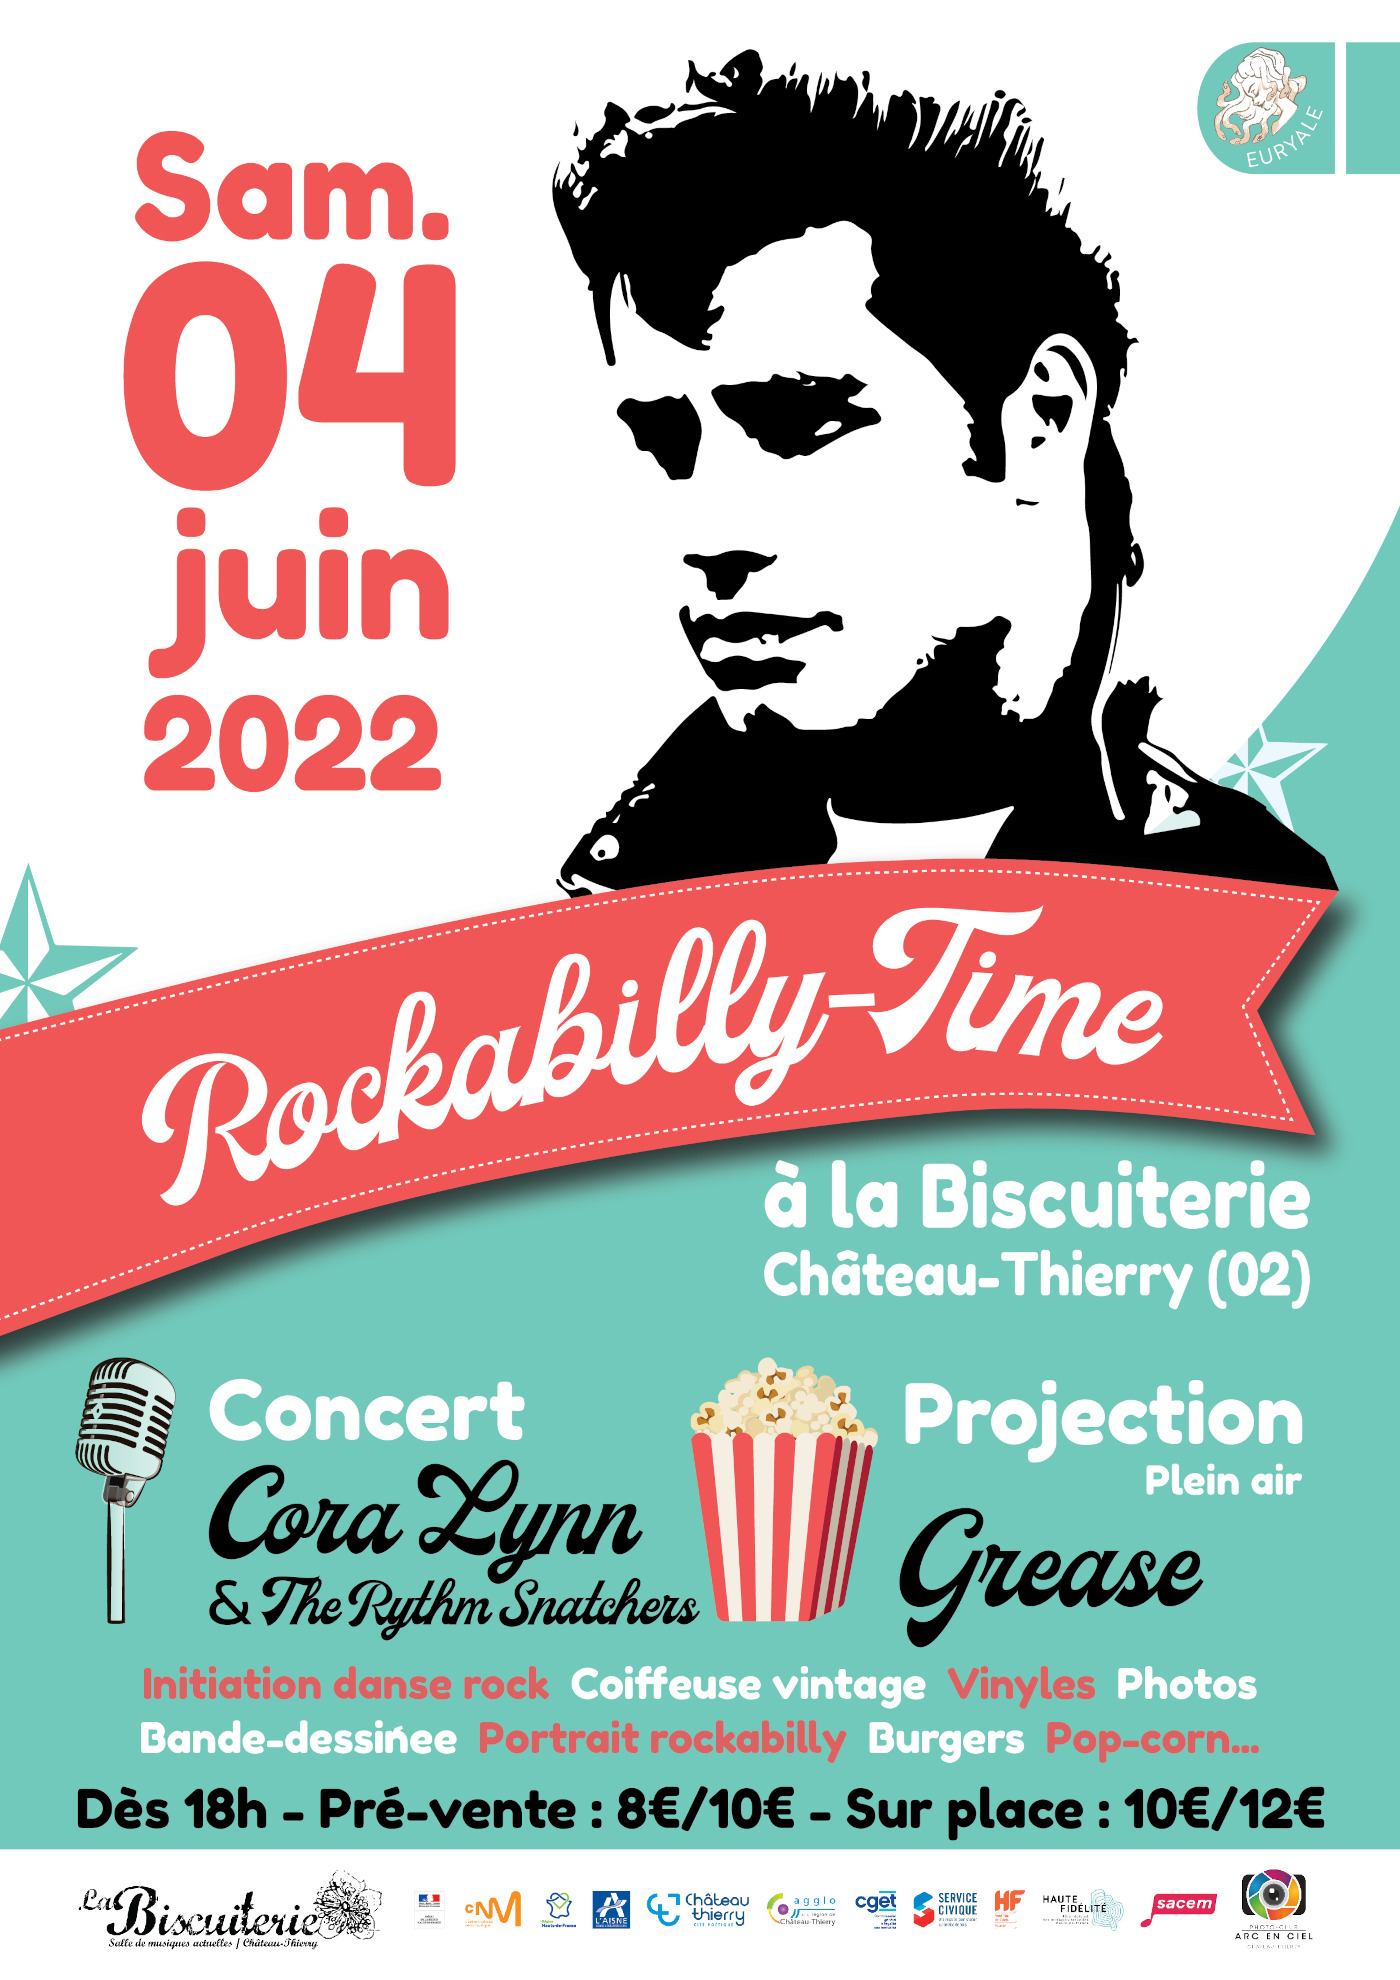 Rockabilly Time - La Biscuiterie Château-Thierry